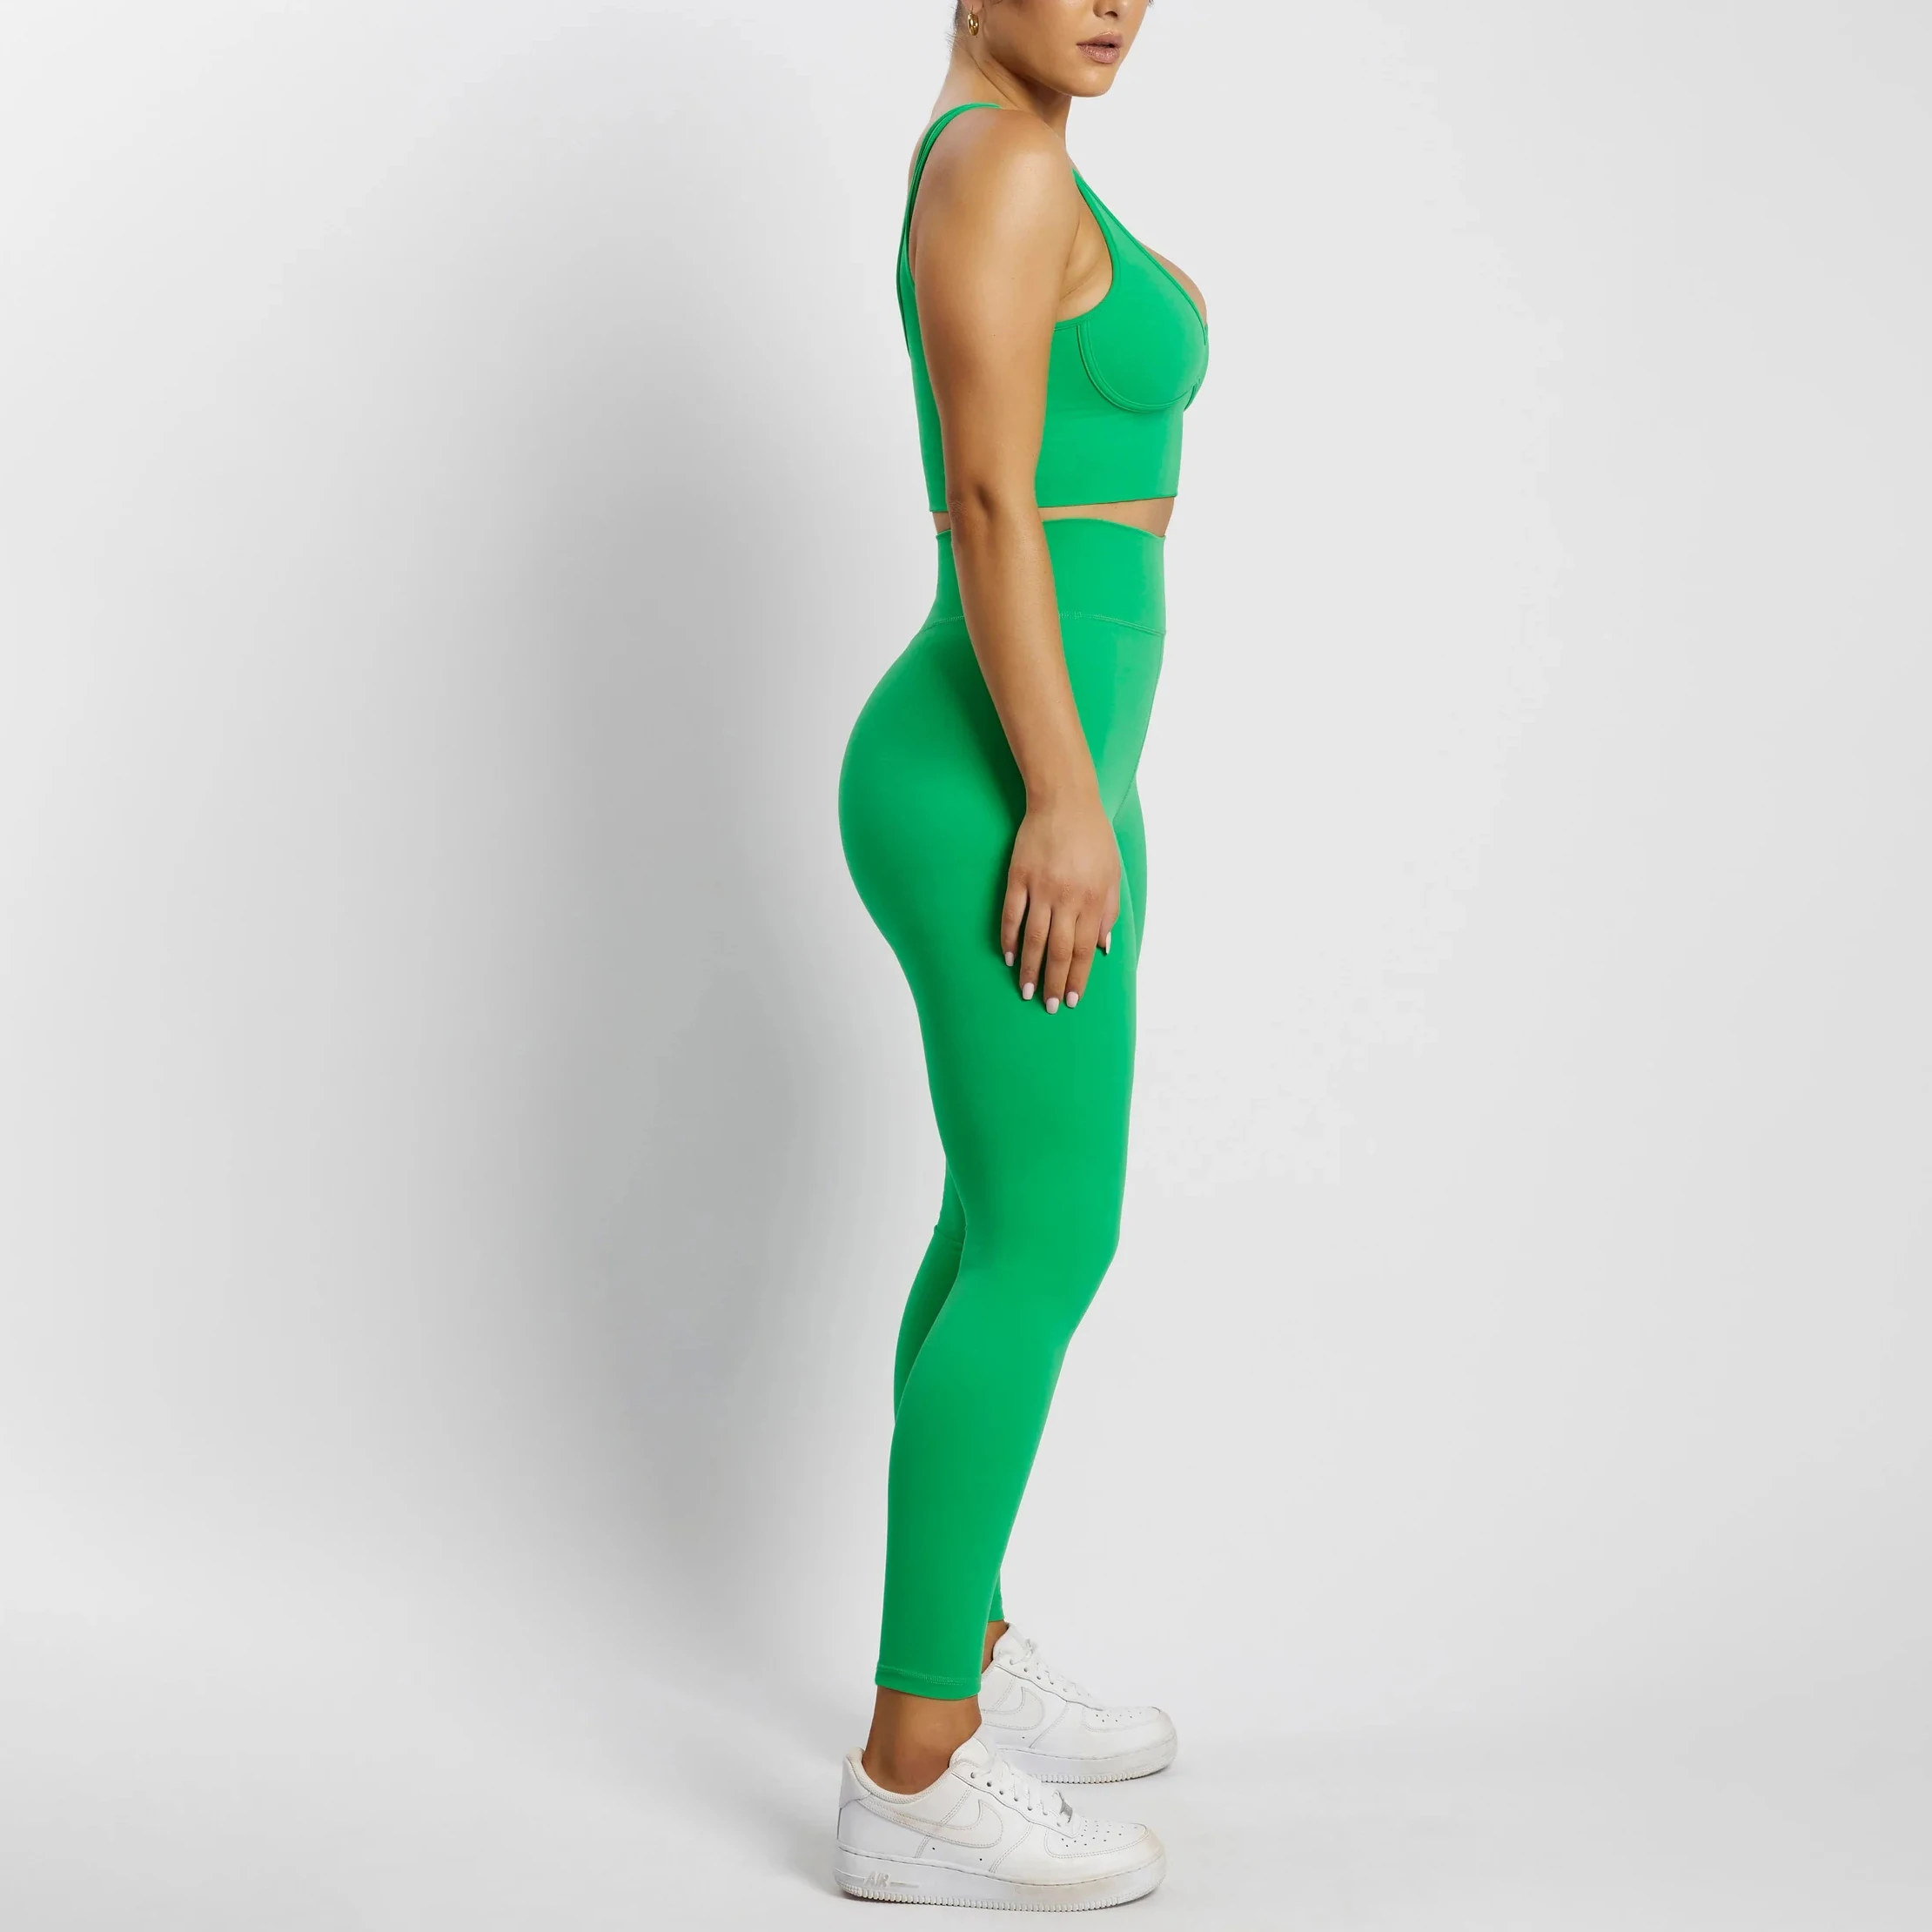 ECBC OEM newest design V neck jogging running  workout bone green sport stretchy gym yoga bra for women